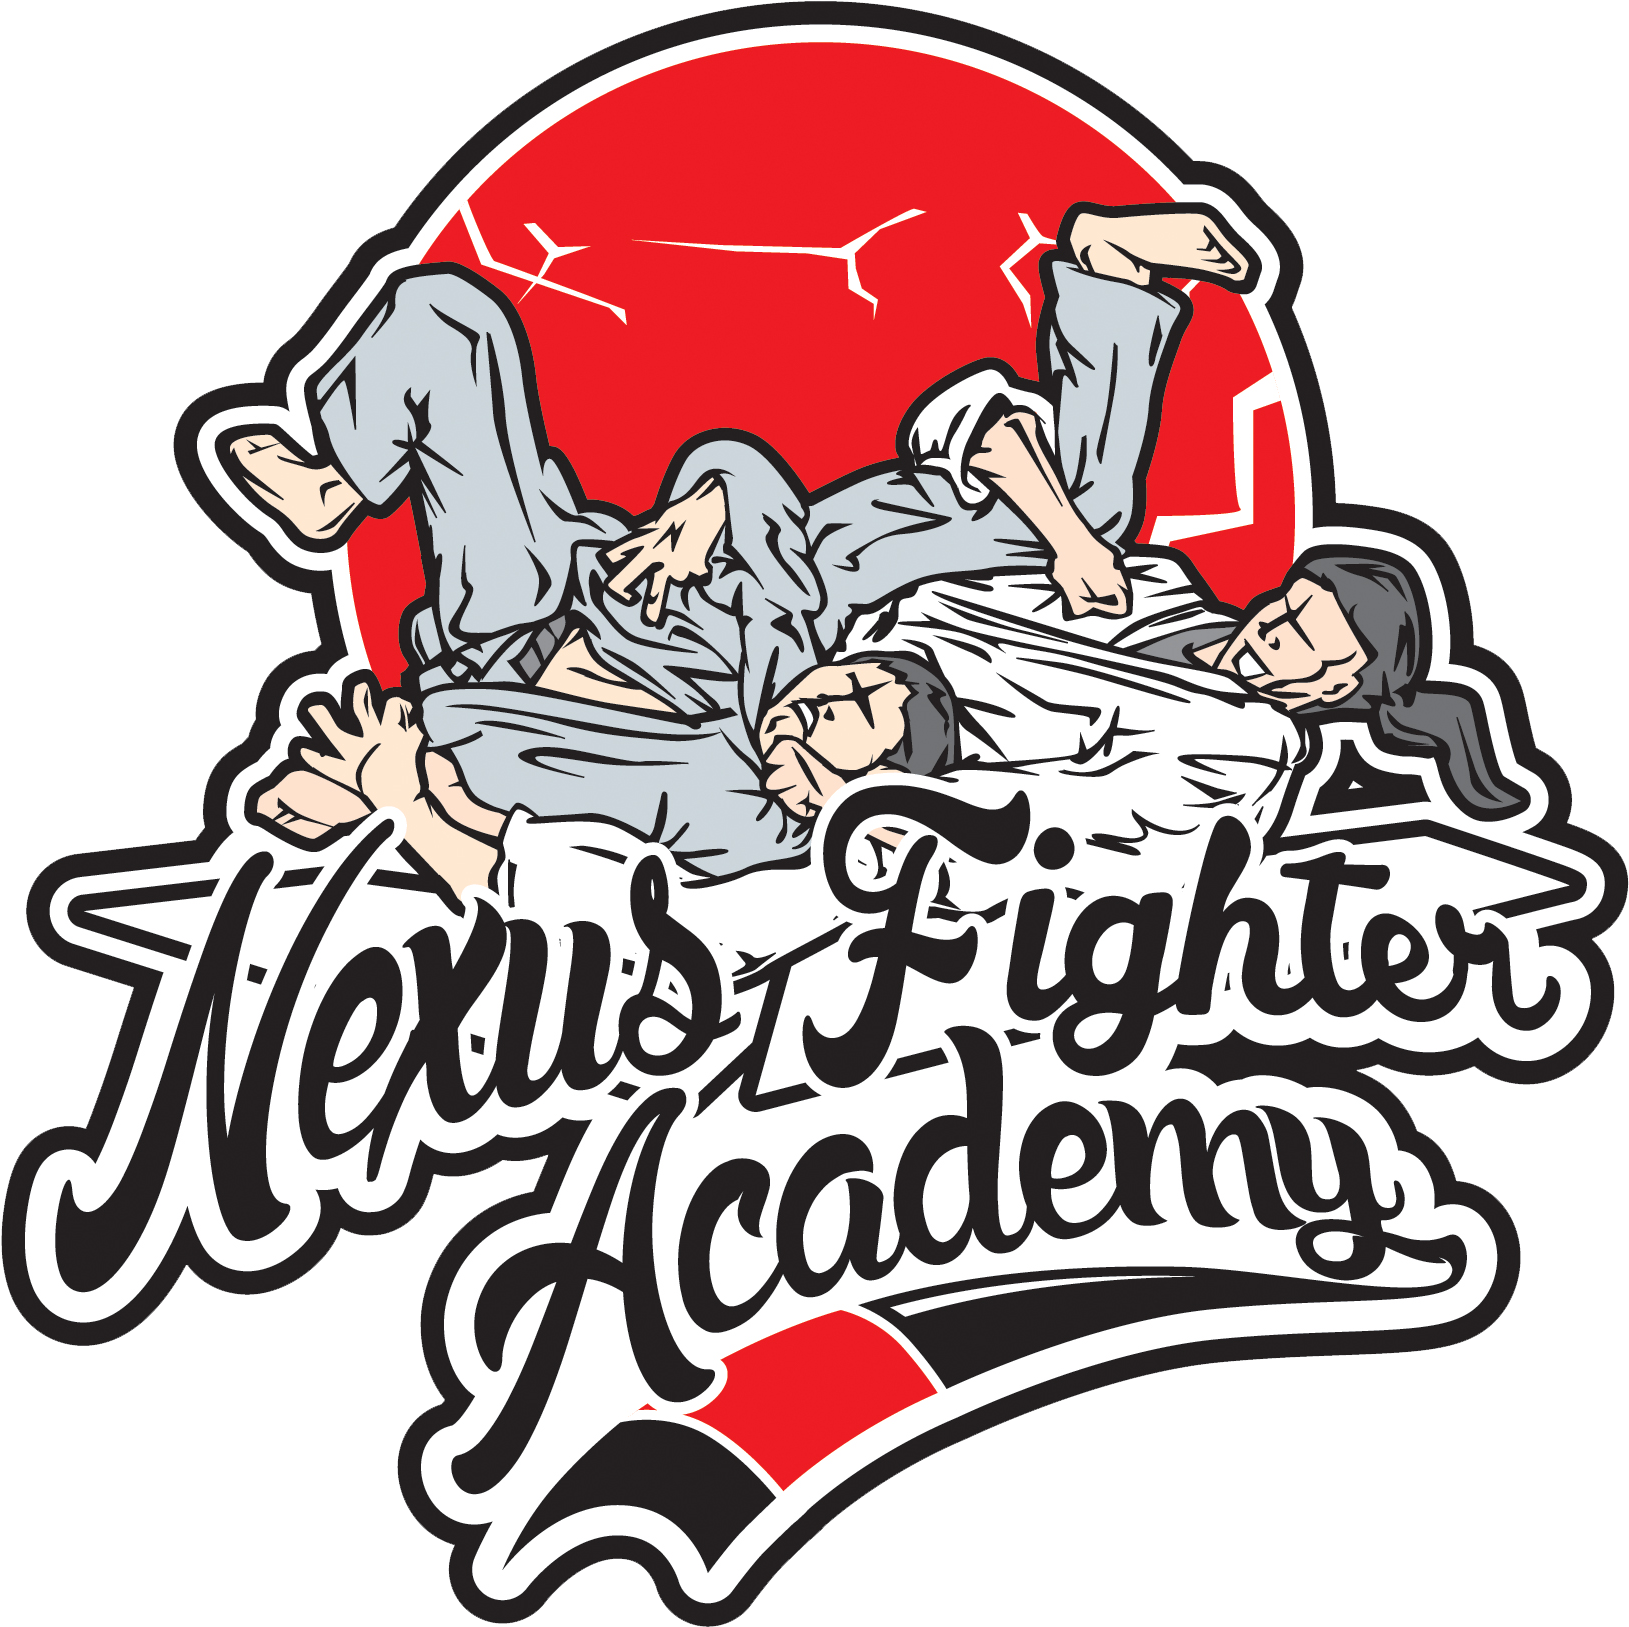 Brazilian Jiu-jitsu Hamburg - Nexus Fighter Academy (1804x1804)